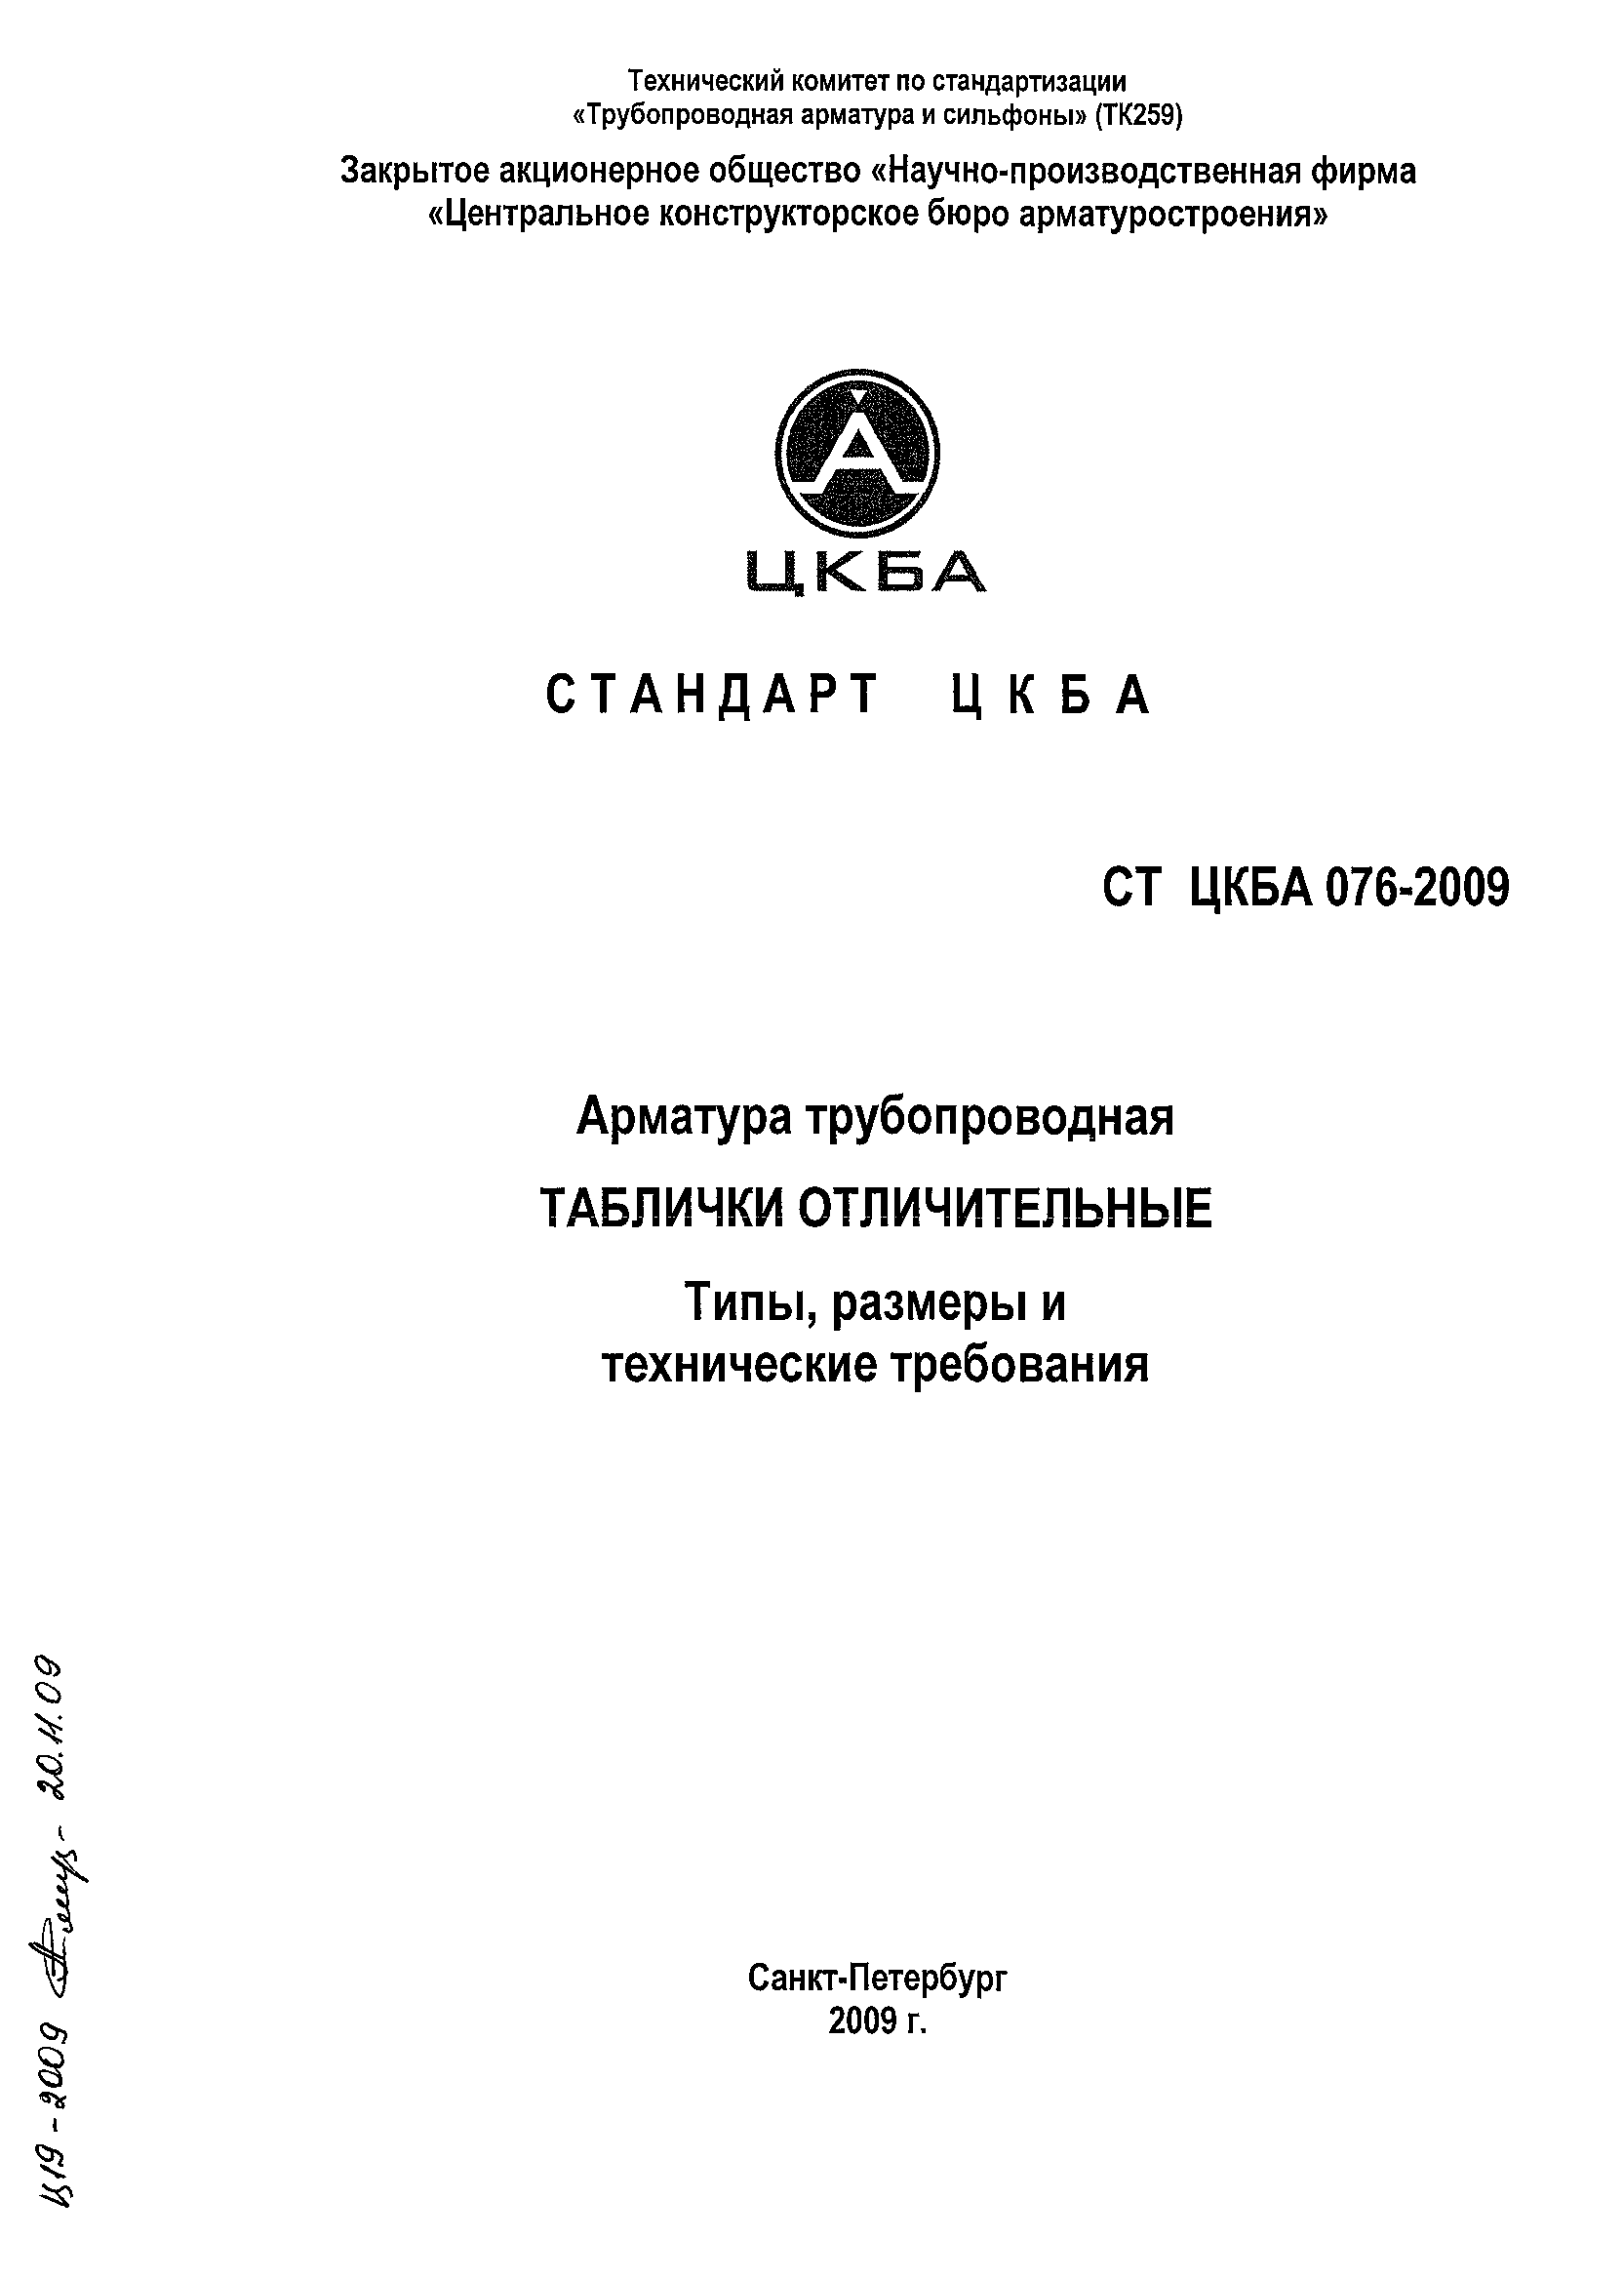 СТ ЦКБА 076-2009